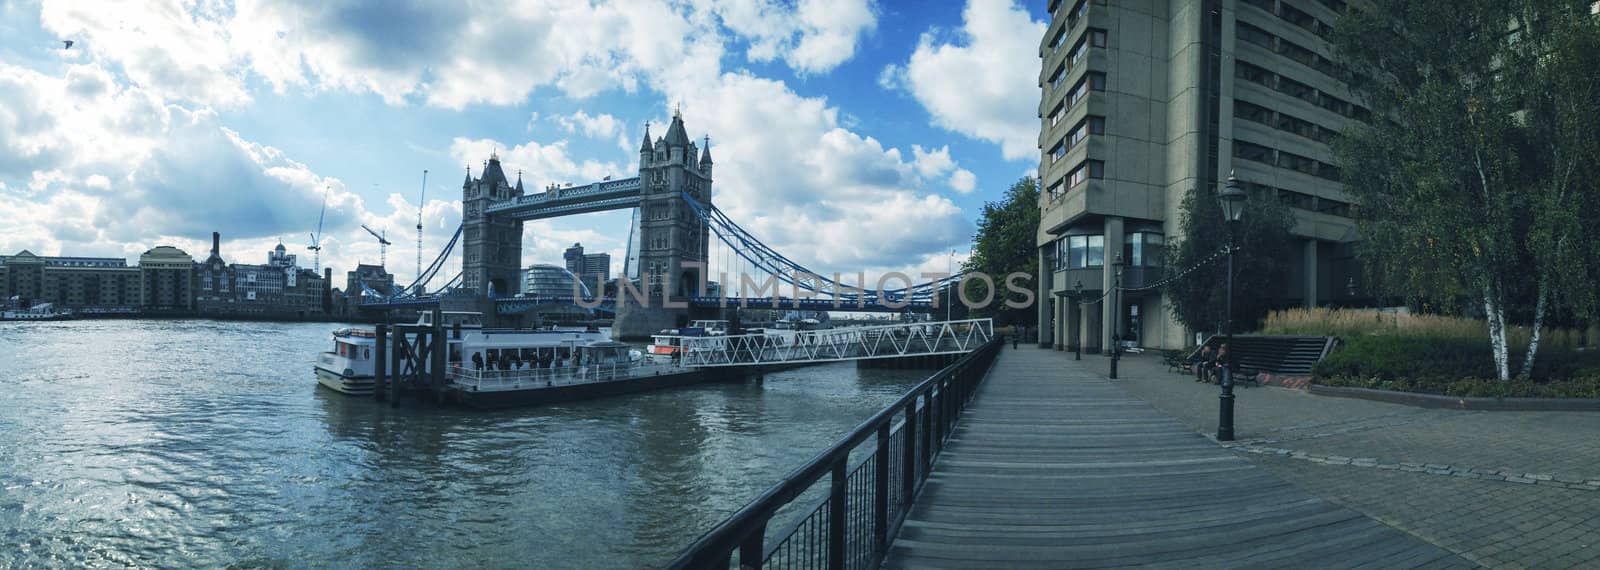 St Katharine Docks in London near Tower Bridge - UK